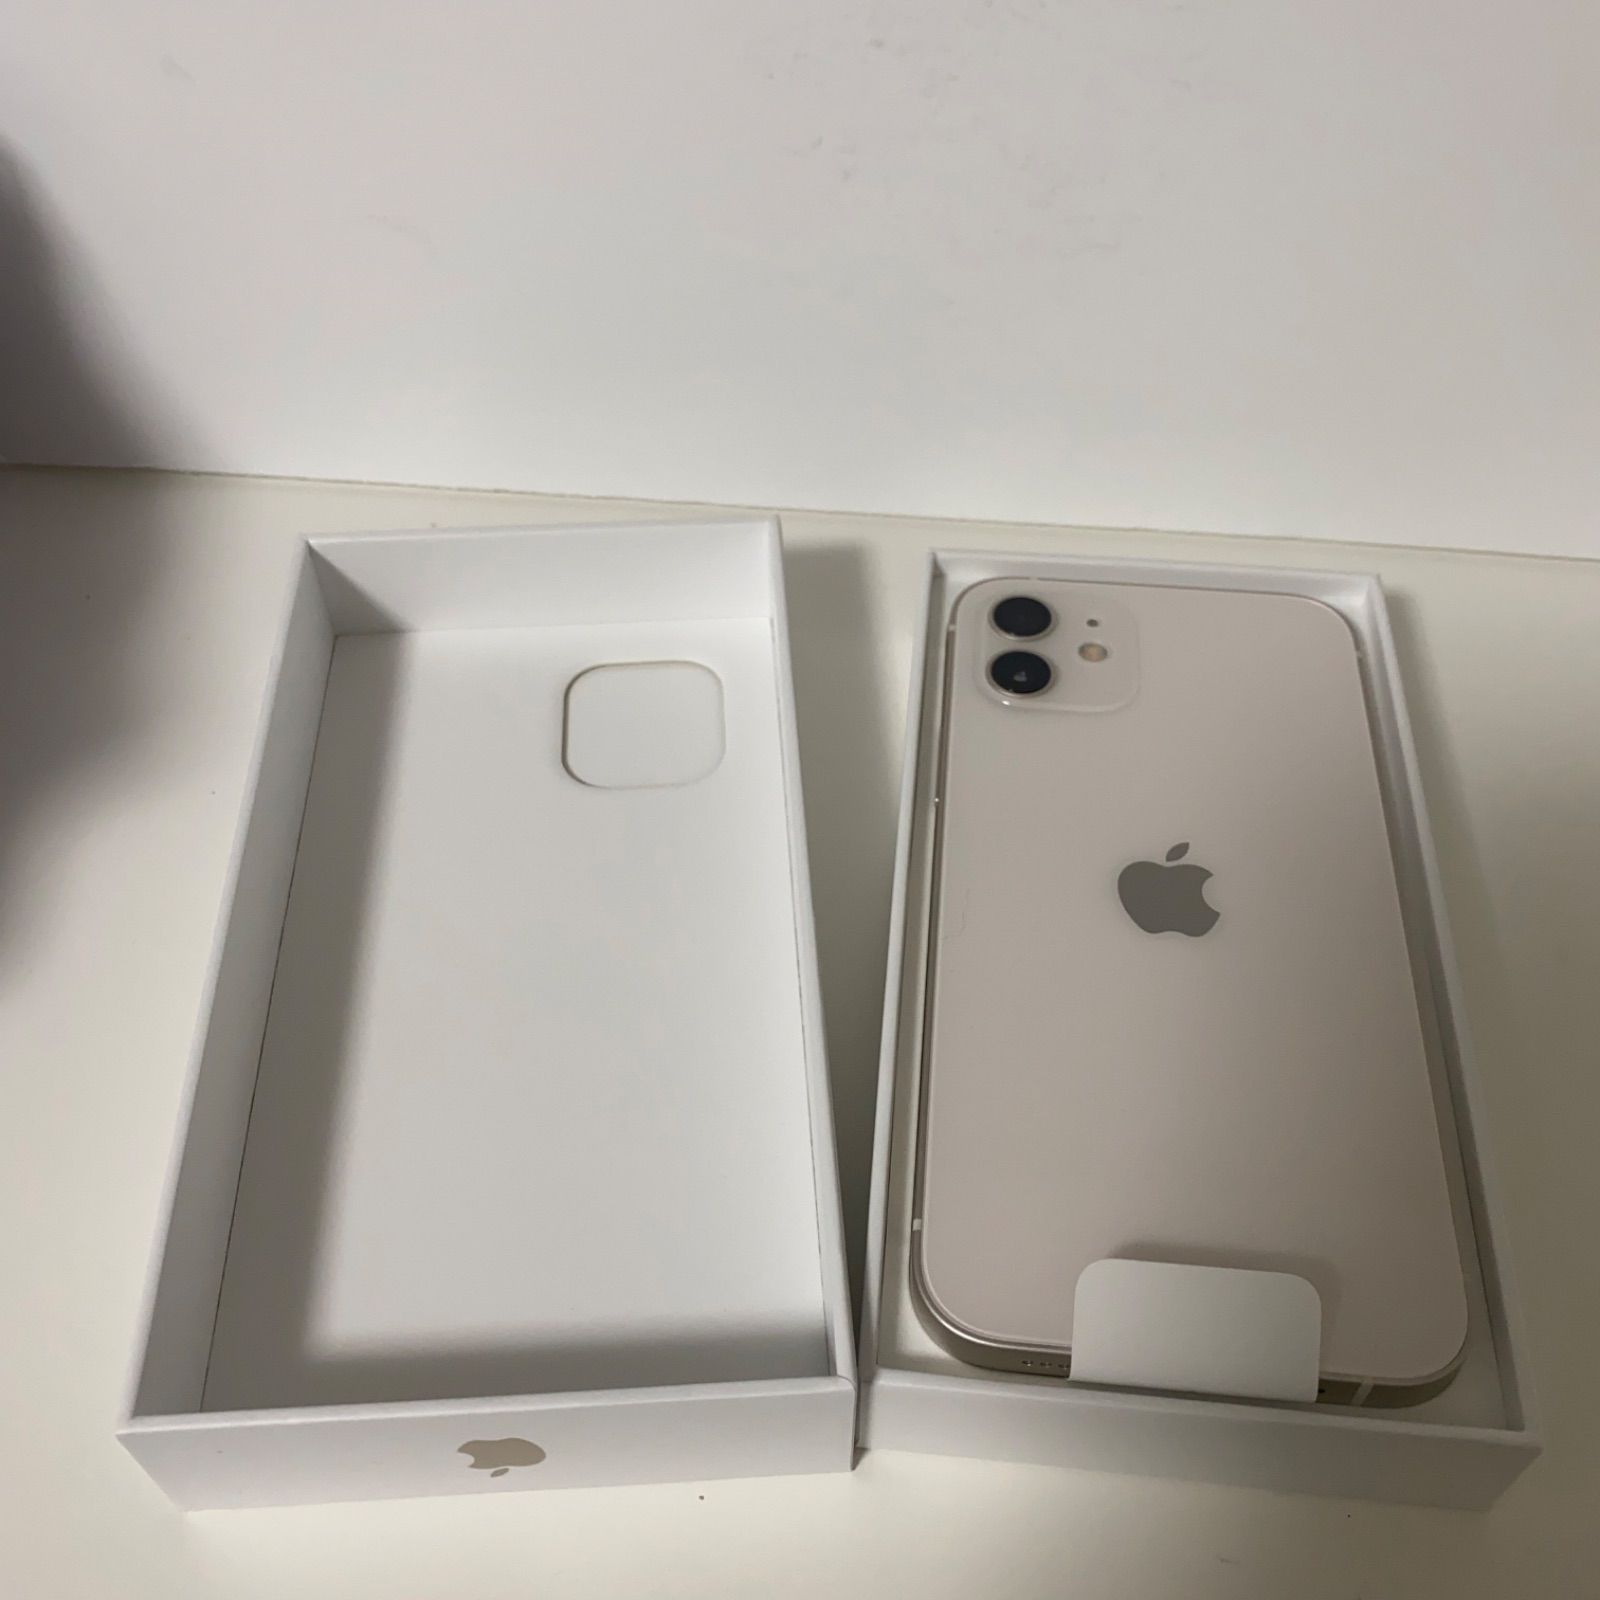 新品、残債無、iPhone 12 White 64GB 本体、SIMフリー、白